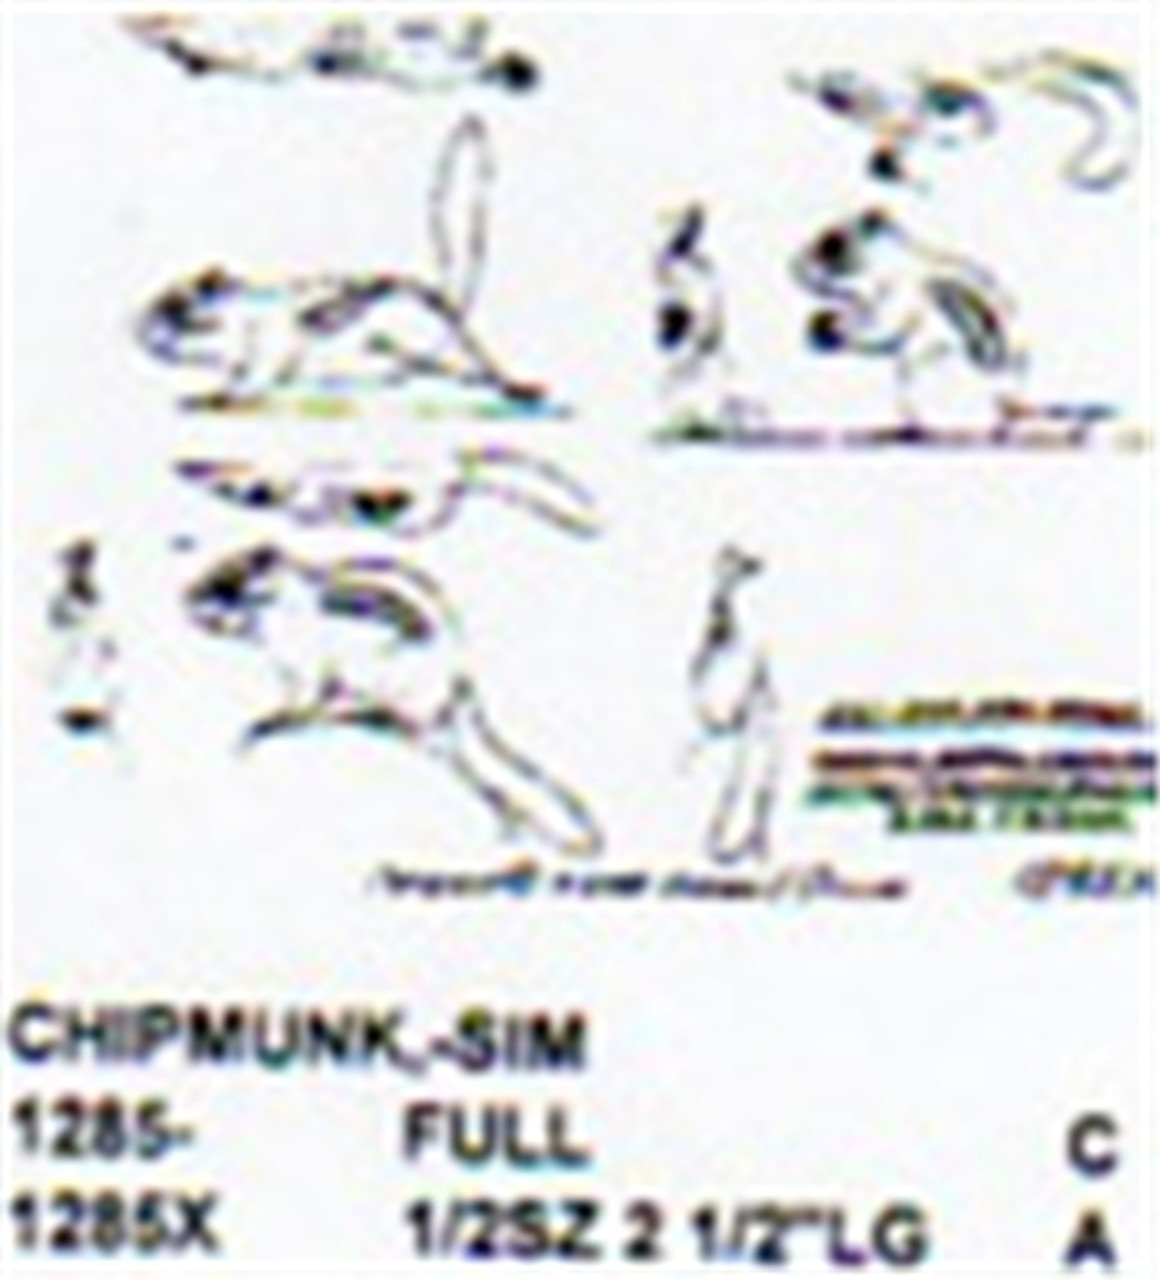 Eastern Chipmunk Setting Down-Running 5" Long